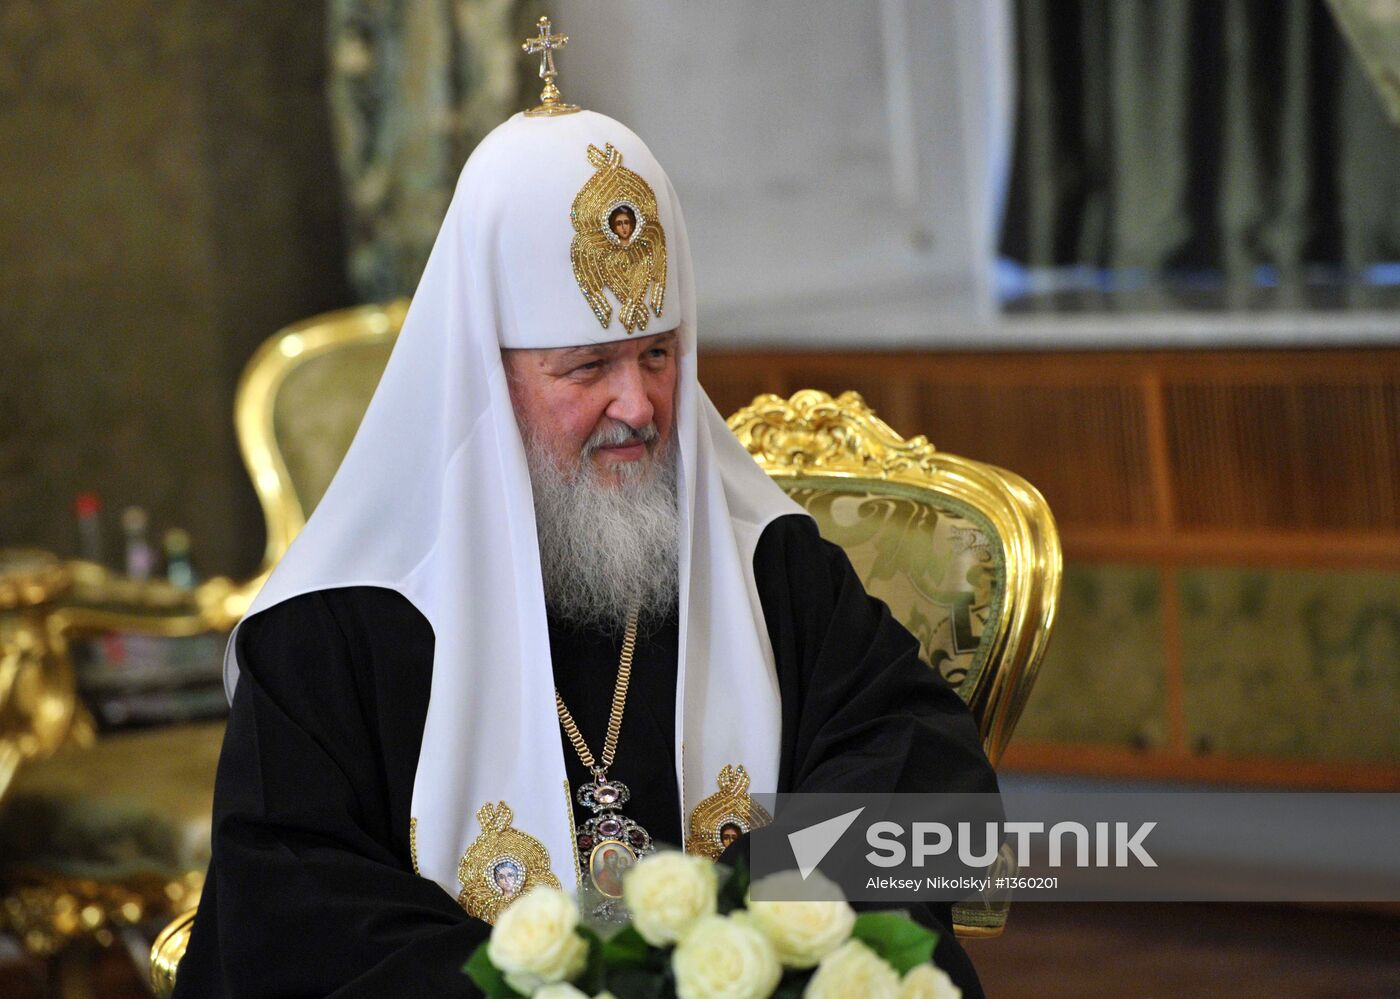 V. Putin congratulates Patriarch Kirill on his Enthronement Day